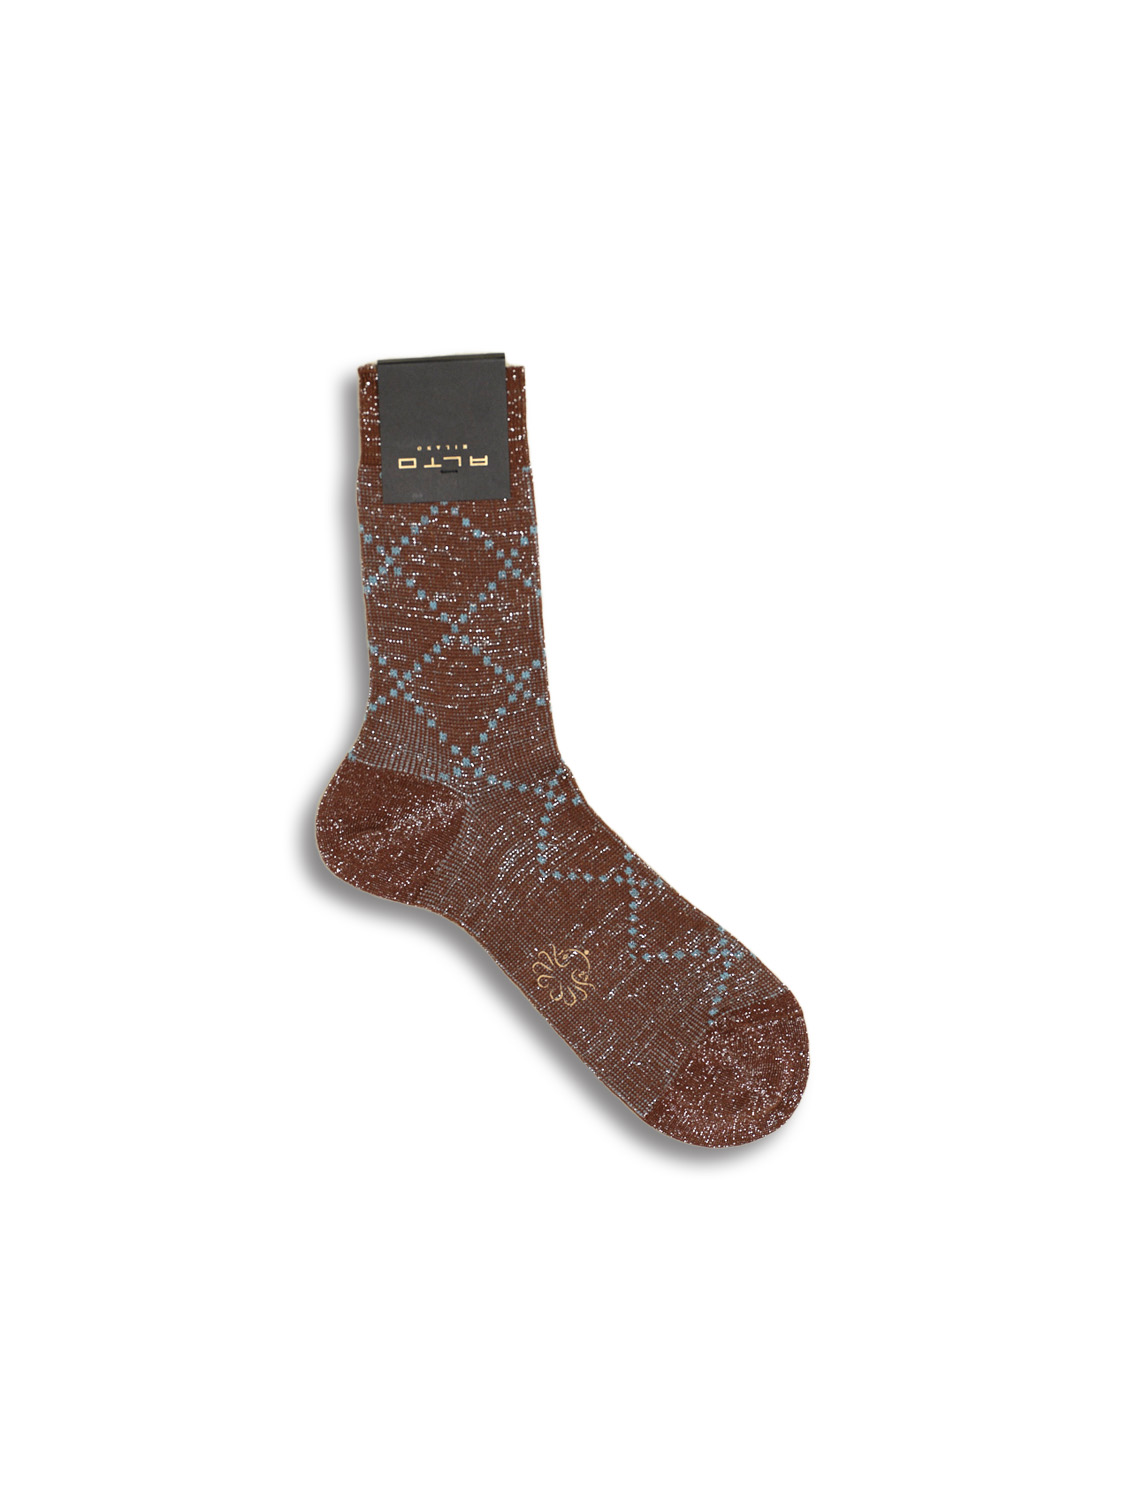 Check Corto - Checked socks with glitter threads 